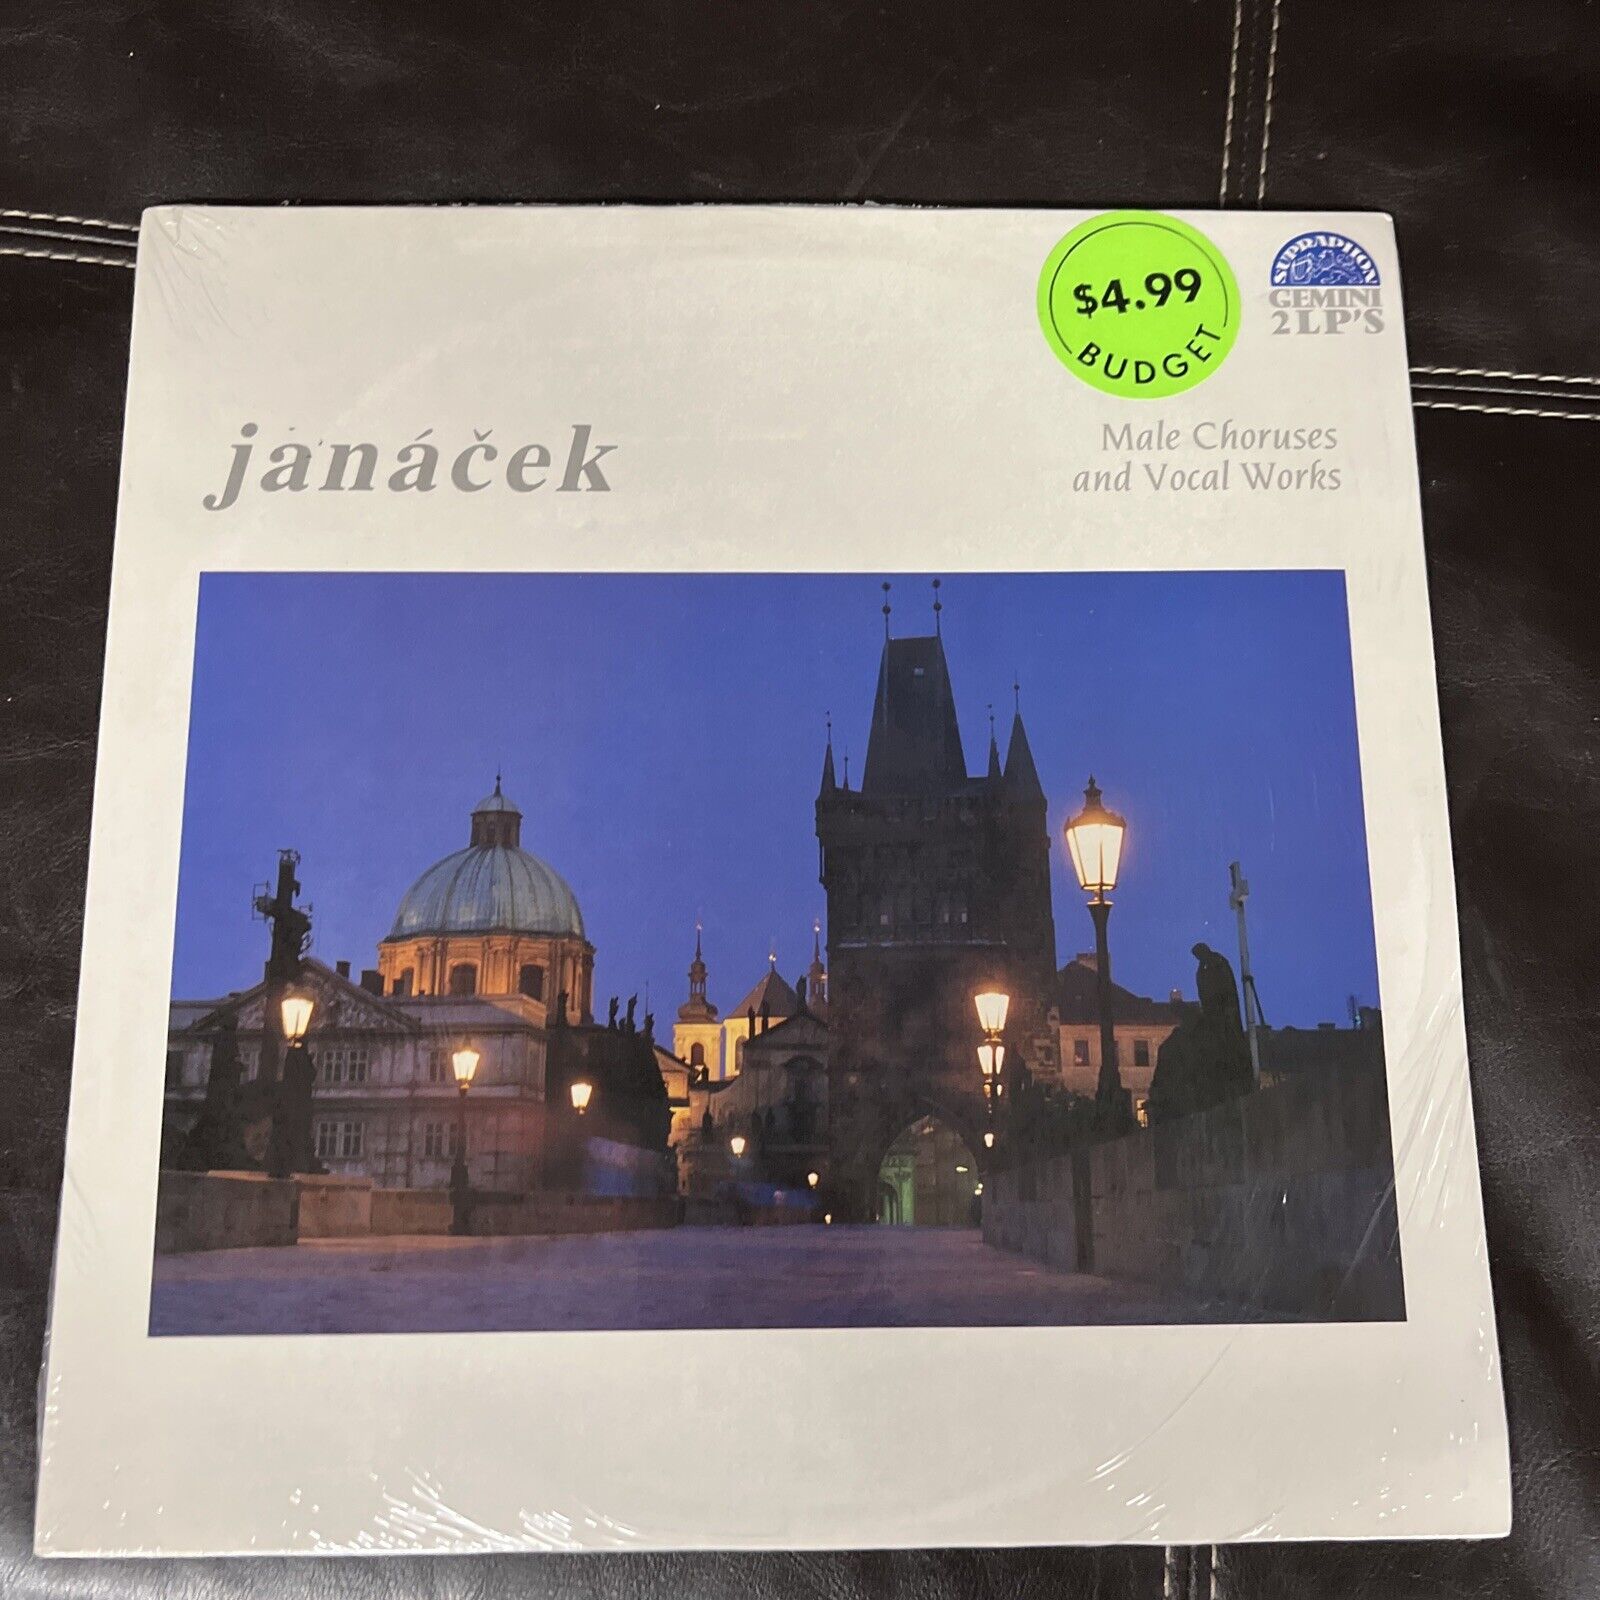 JANACEK LP MALE CHORUSES & VOCAL WORKS SUPD 013 CLASSICAL VINTAGE 1971 CZECH